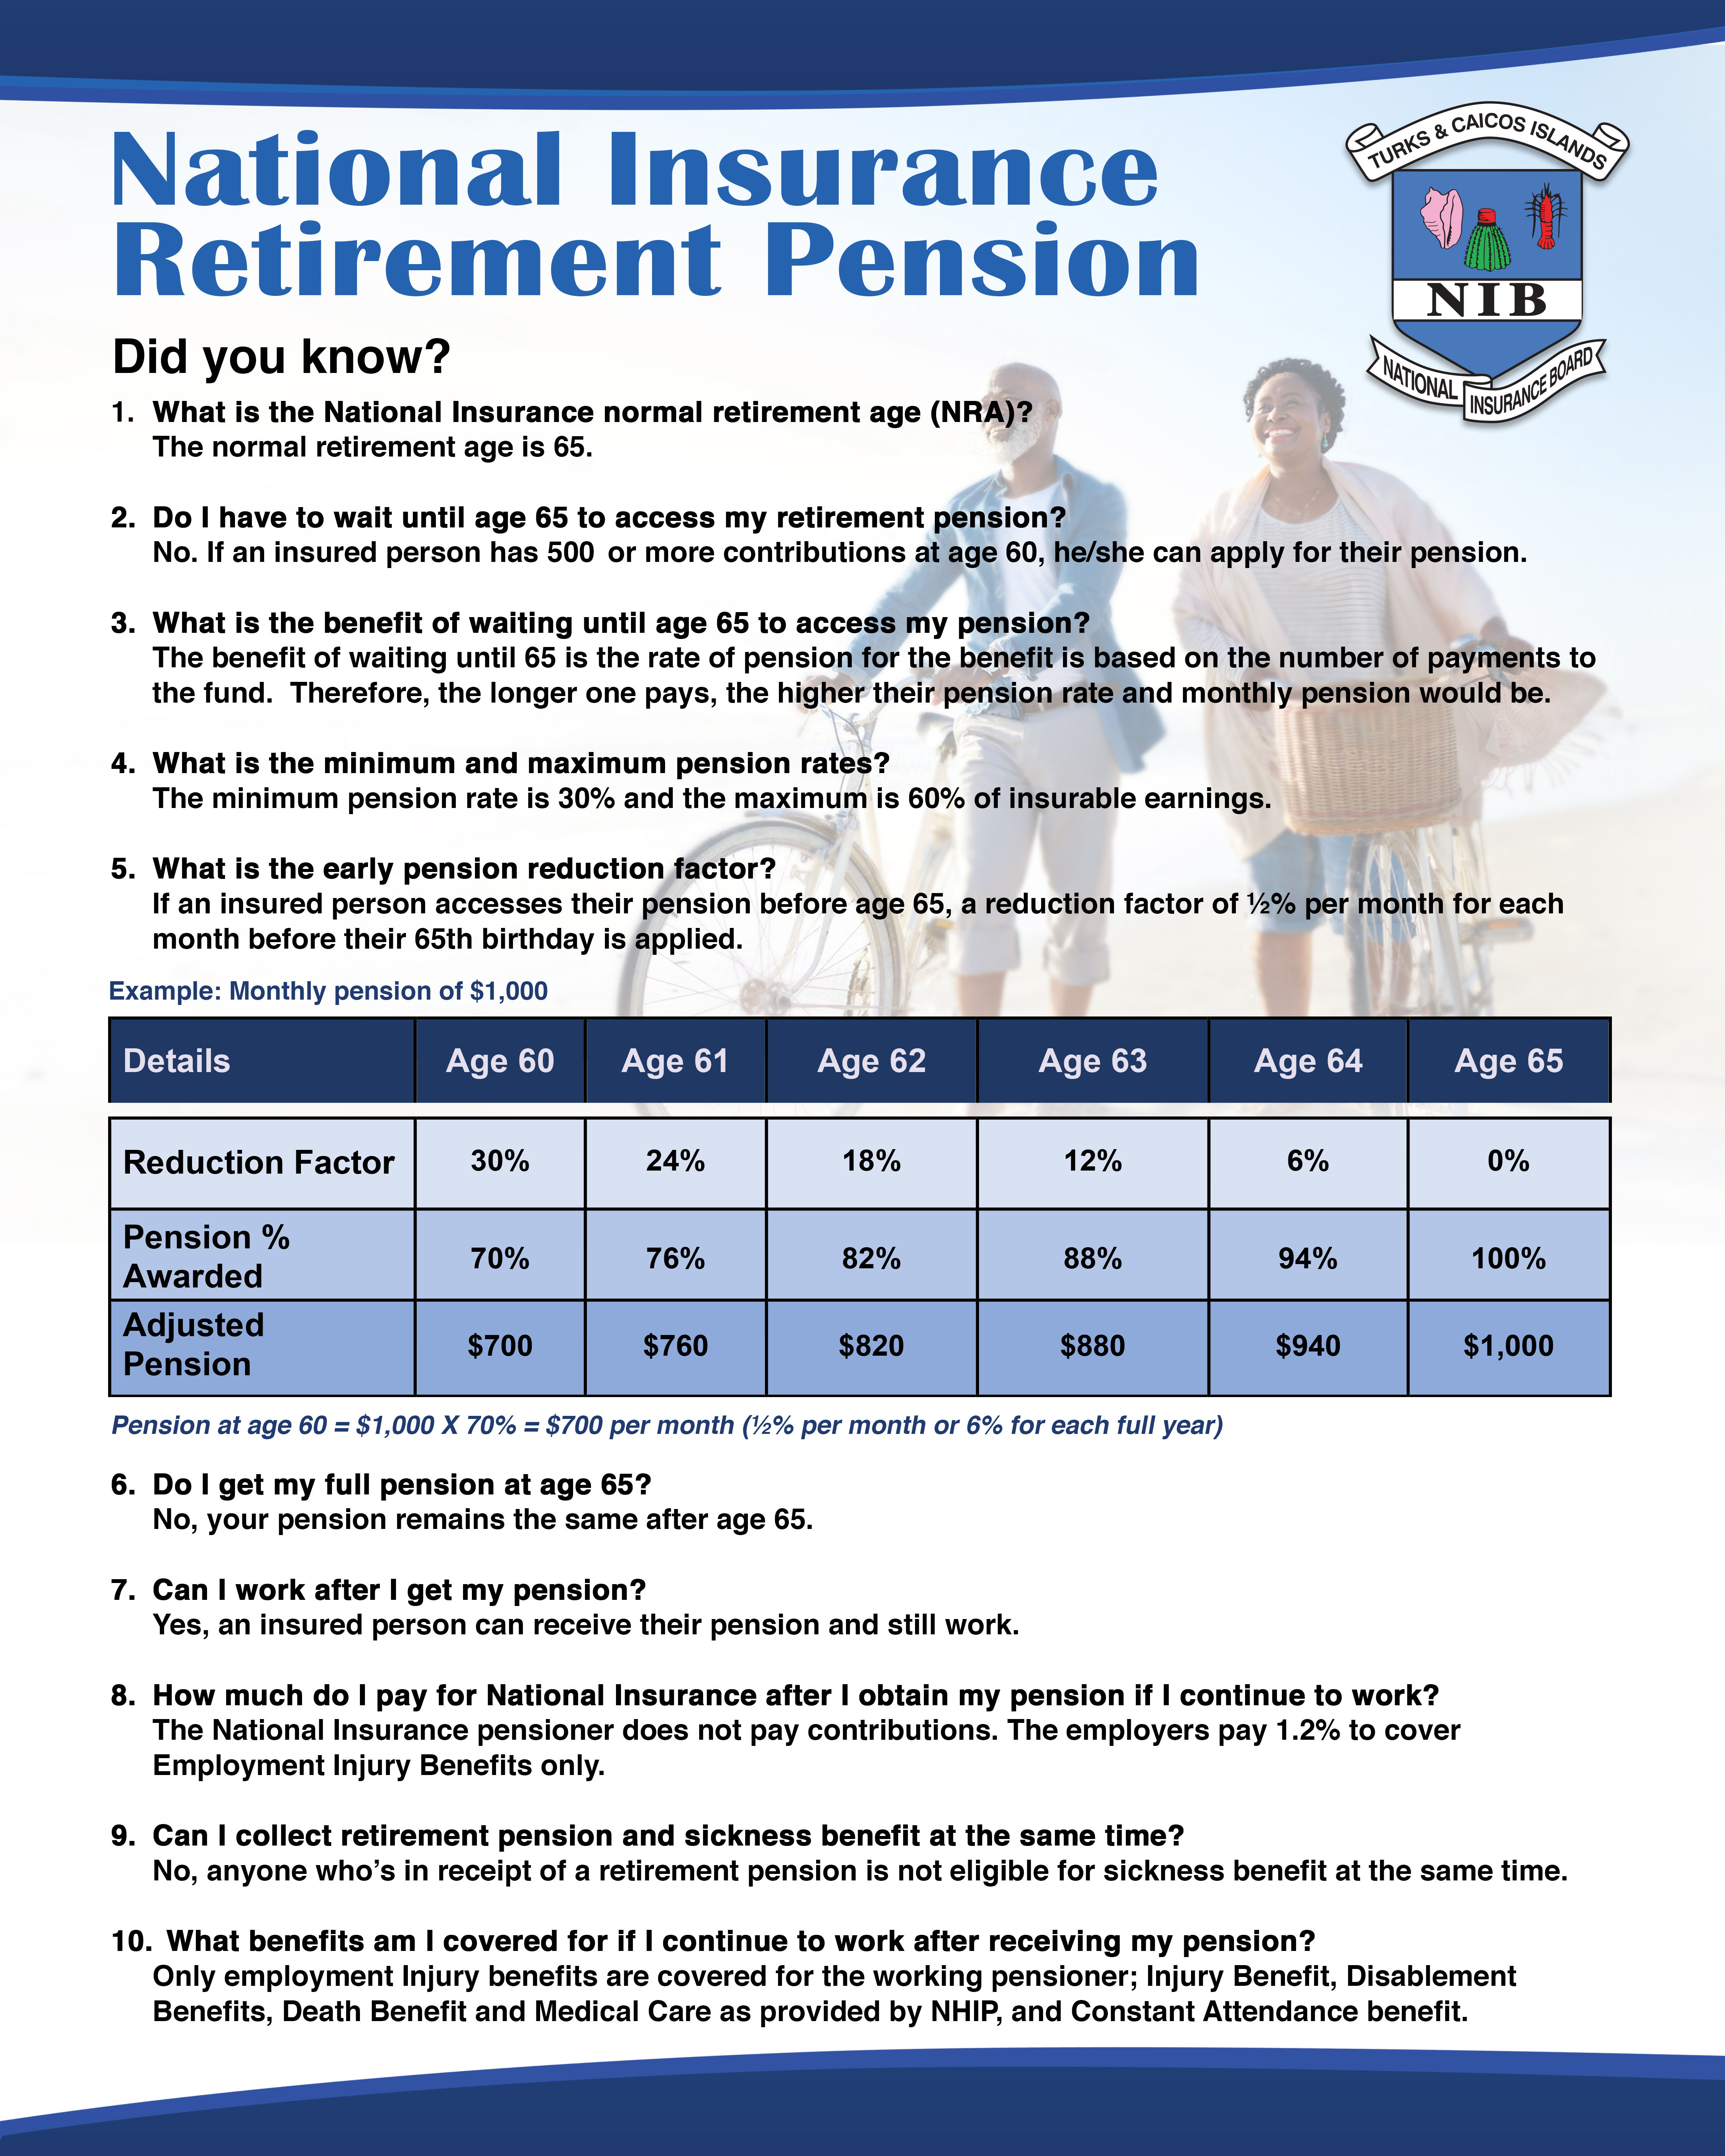 nib-retirement-pension-flyer-002 National Insurance Retirement Pension